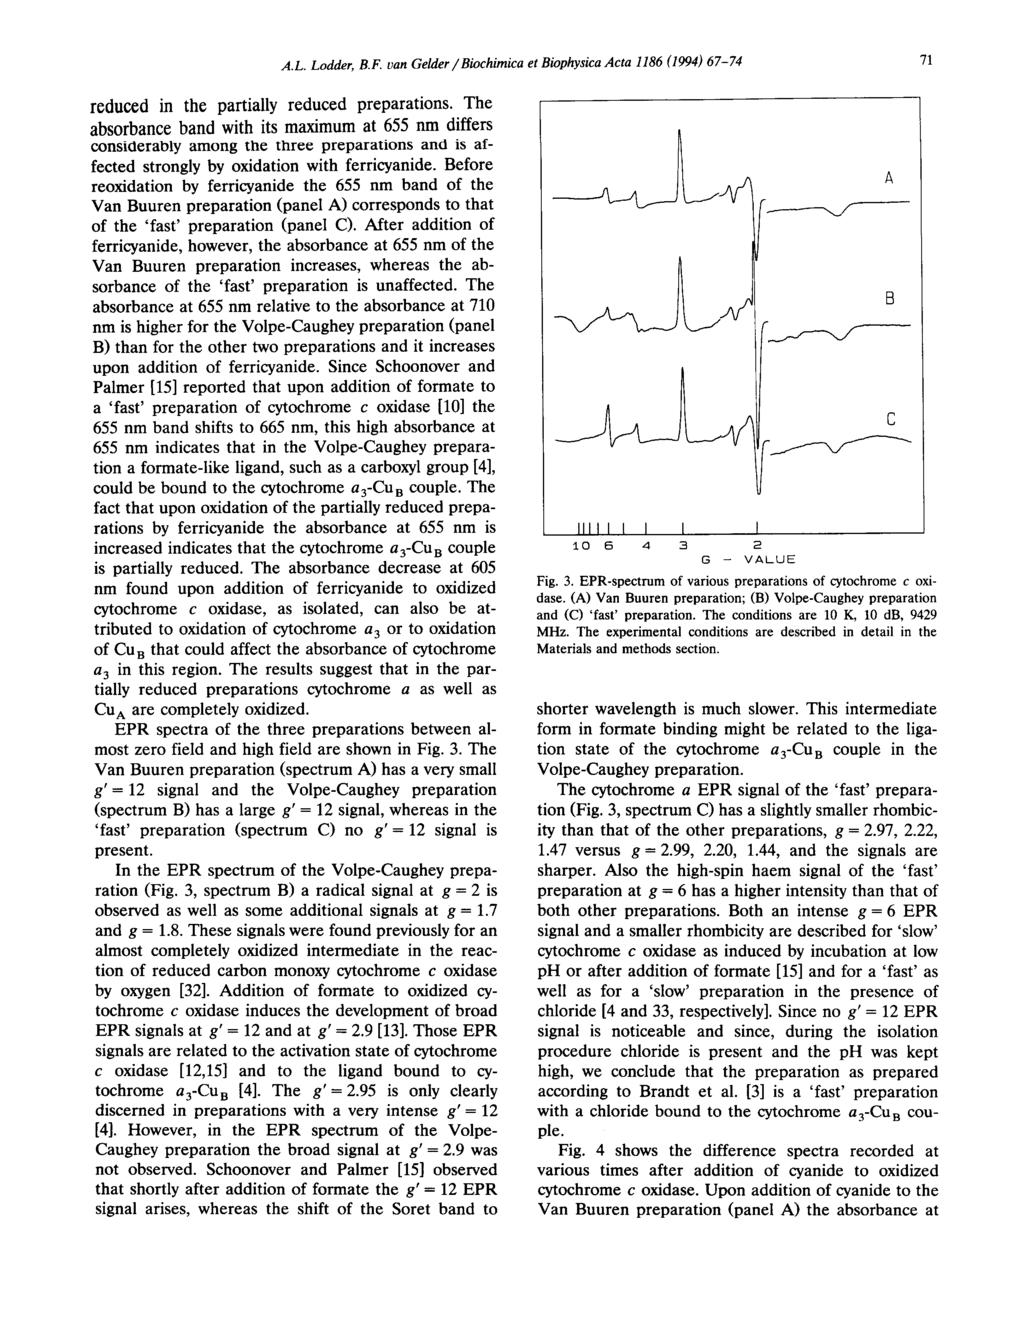 A.L. Lodder, B.F. van Gelder / Biochimica et Biophysica Acta 1186 (1994) 67-74 71 reduced in the partially reduced preparations.